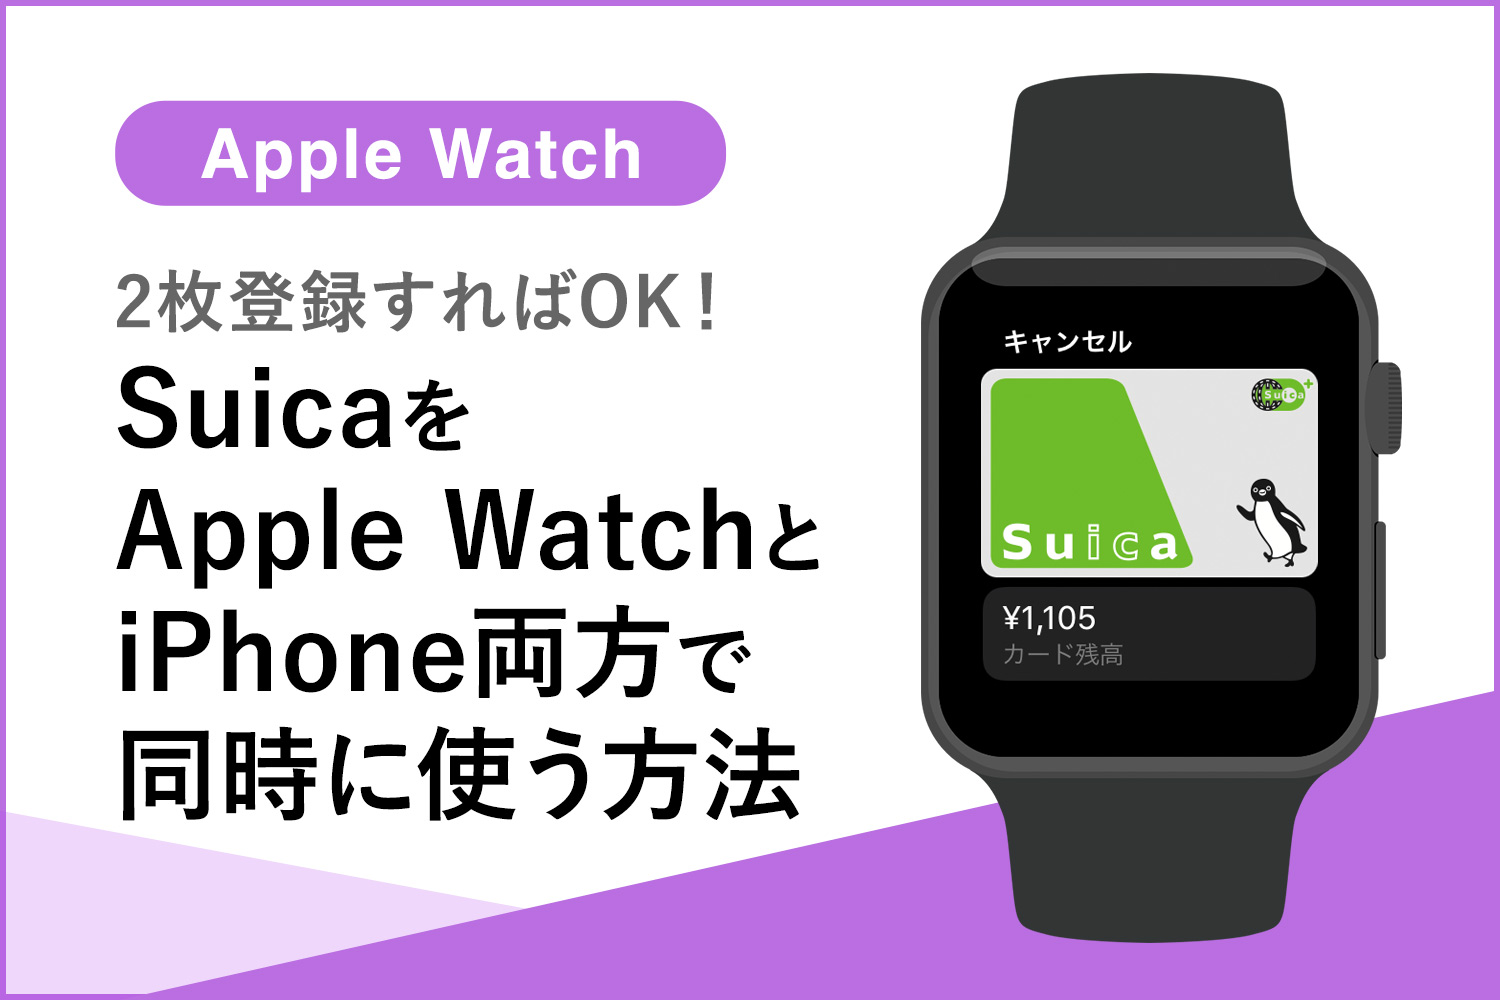 Suica・PASMOをApple WatchとiPhone両方で同時に使うには？【2枚登録すればOK】